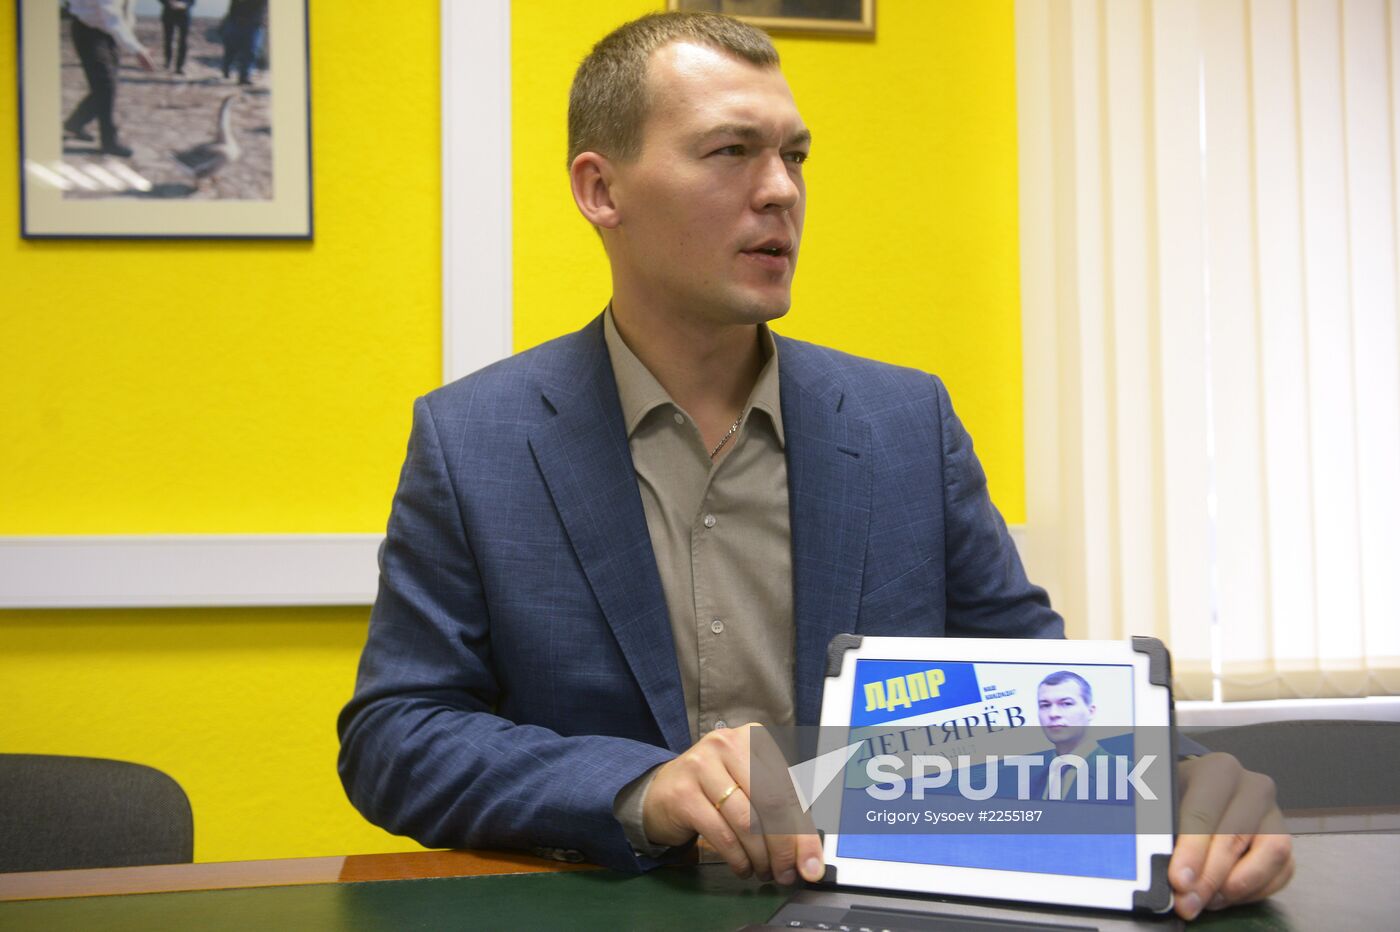 Moscow mayoral candidate Mikhail Degtyaryov